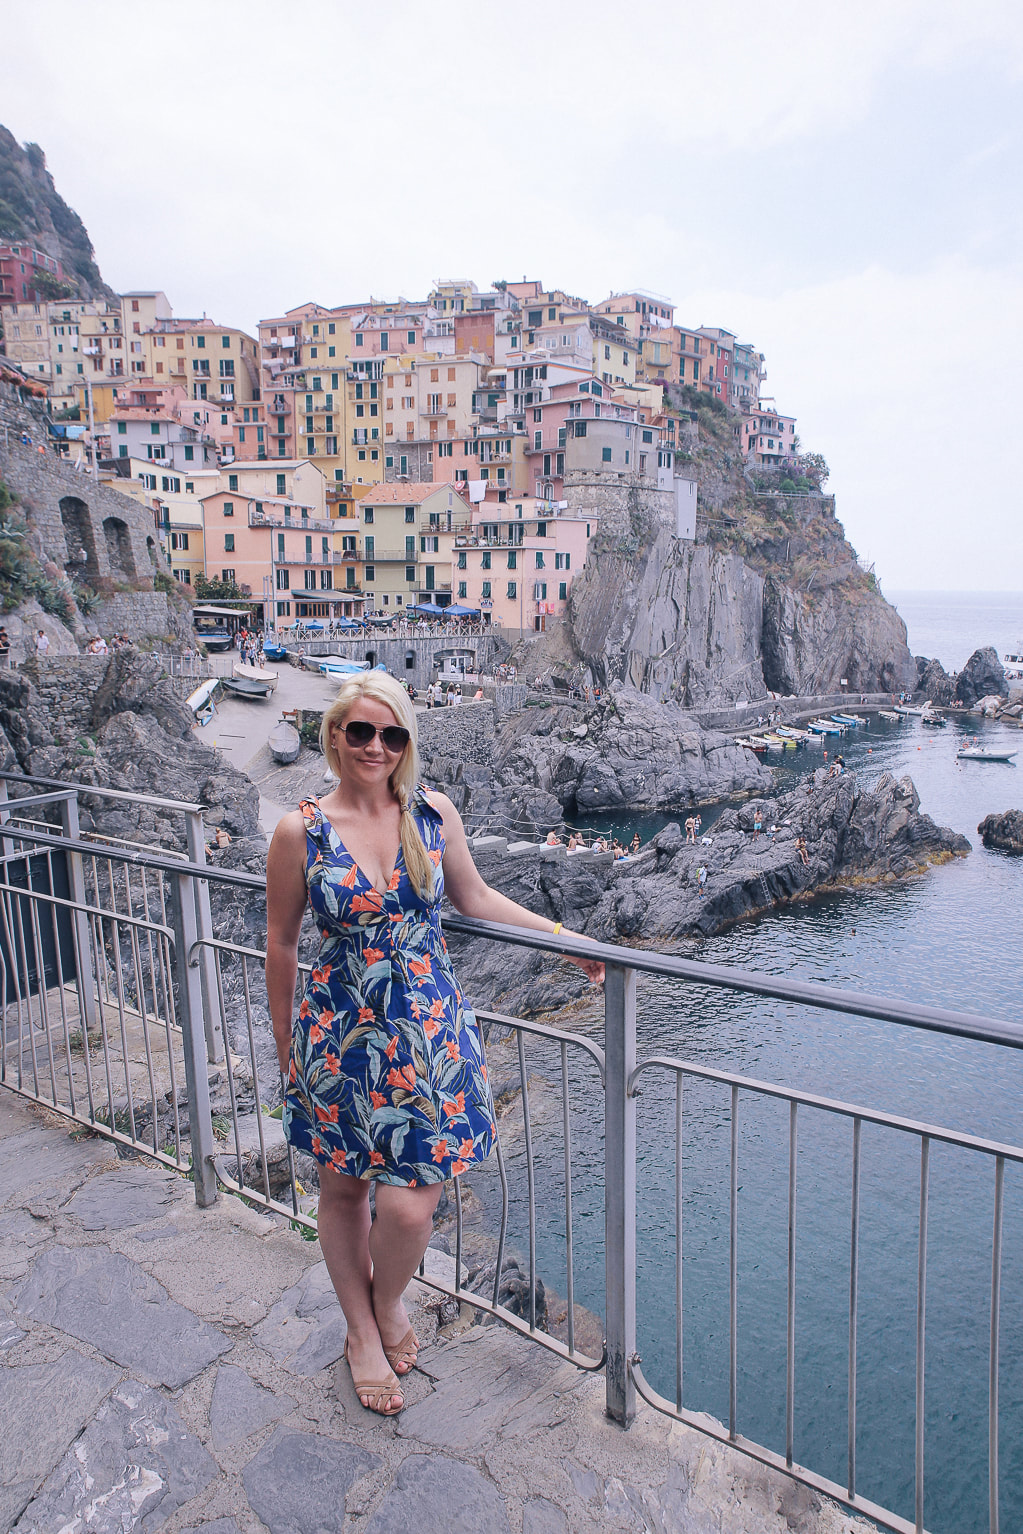 A day trip to Manarola, Cinque Terre by The Belle Blog